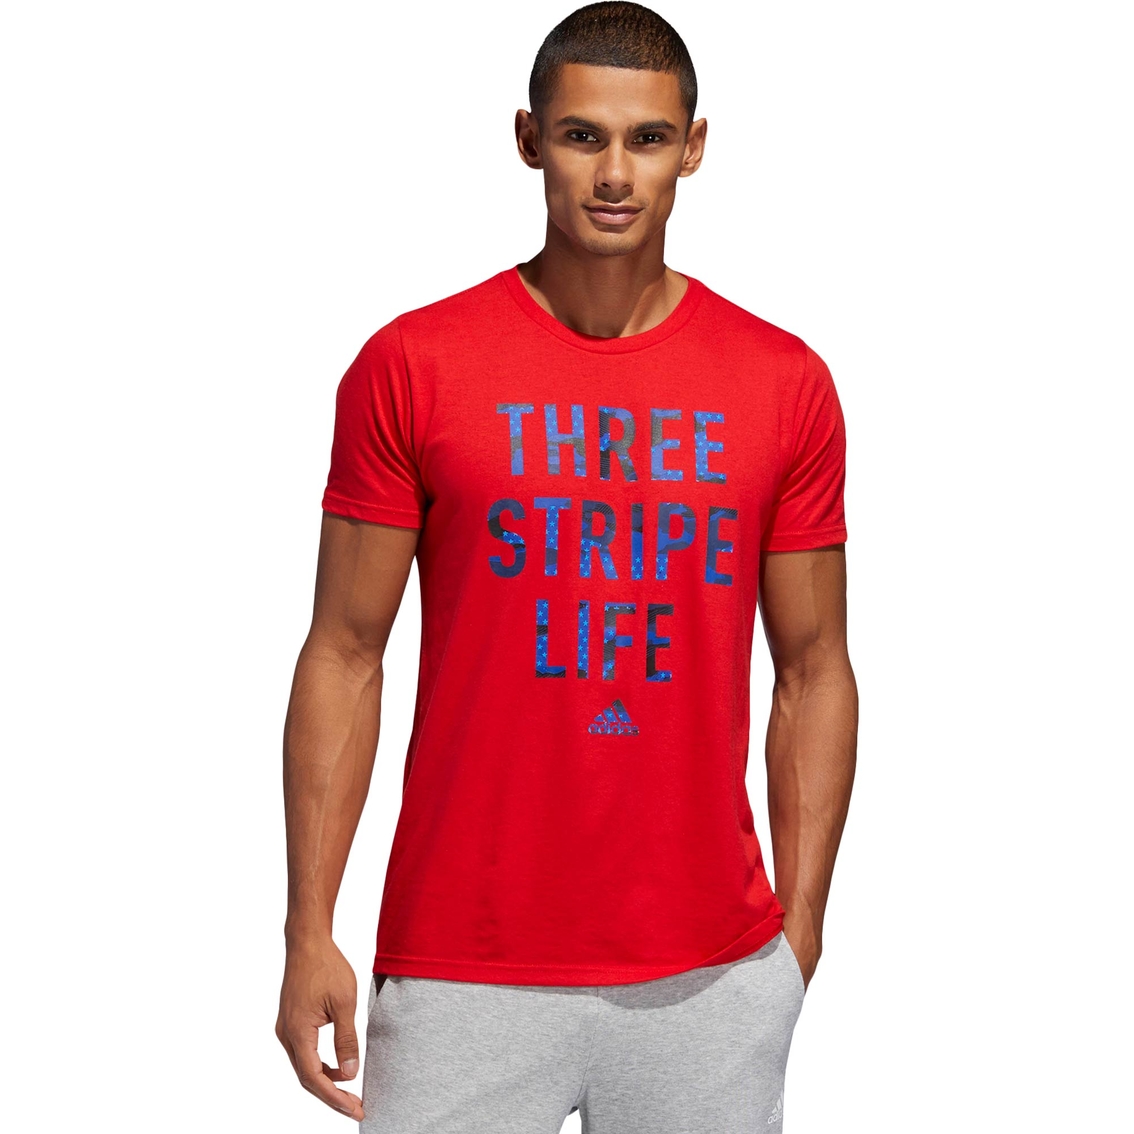 Adidas Three Stripe Life Camo Tee | Shirts | Clothing & Accessories ...